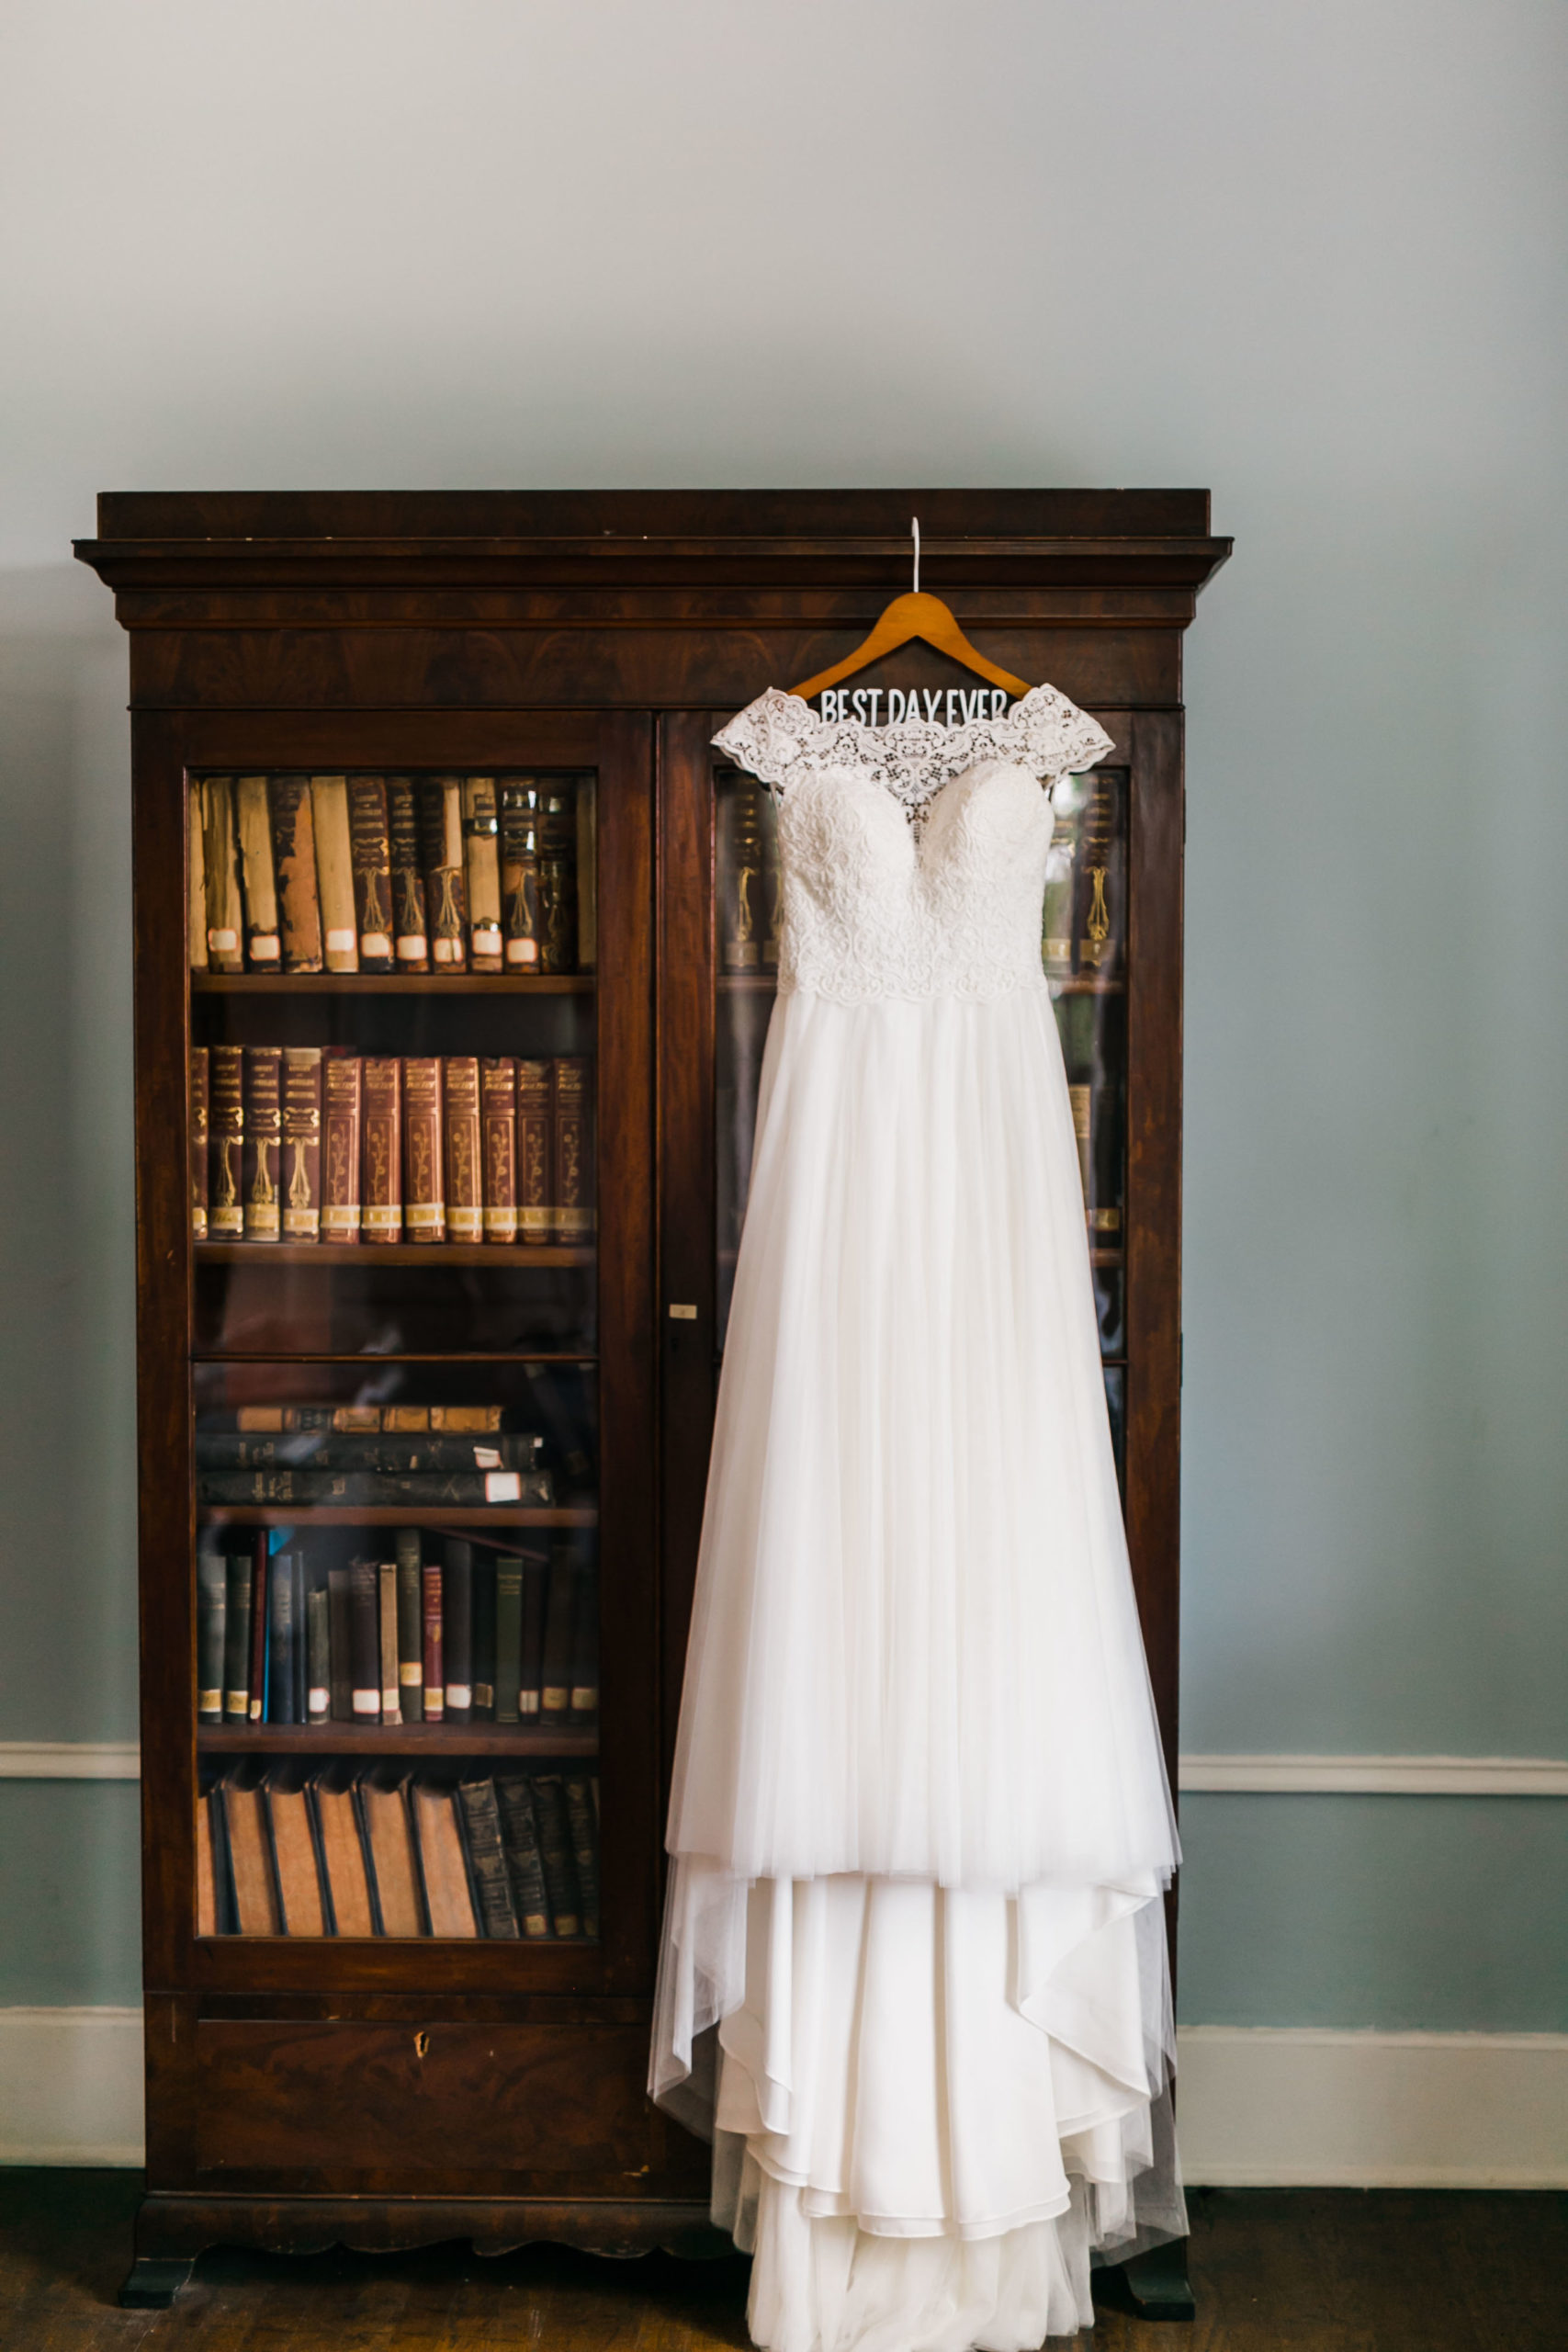 flowy wedding dress on best day ever hanger hanging on bookcase in historic bleak house